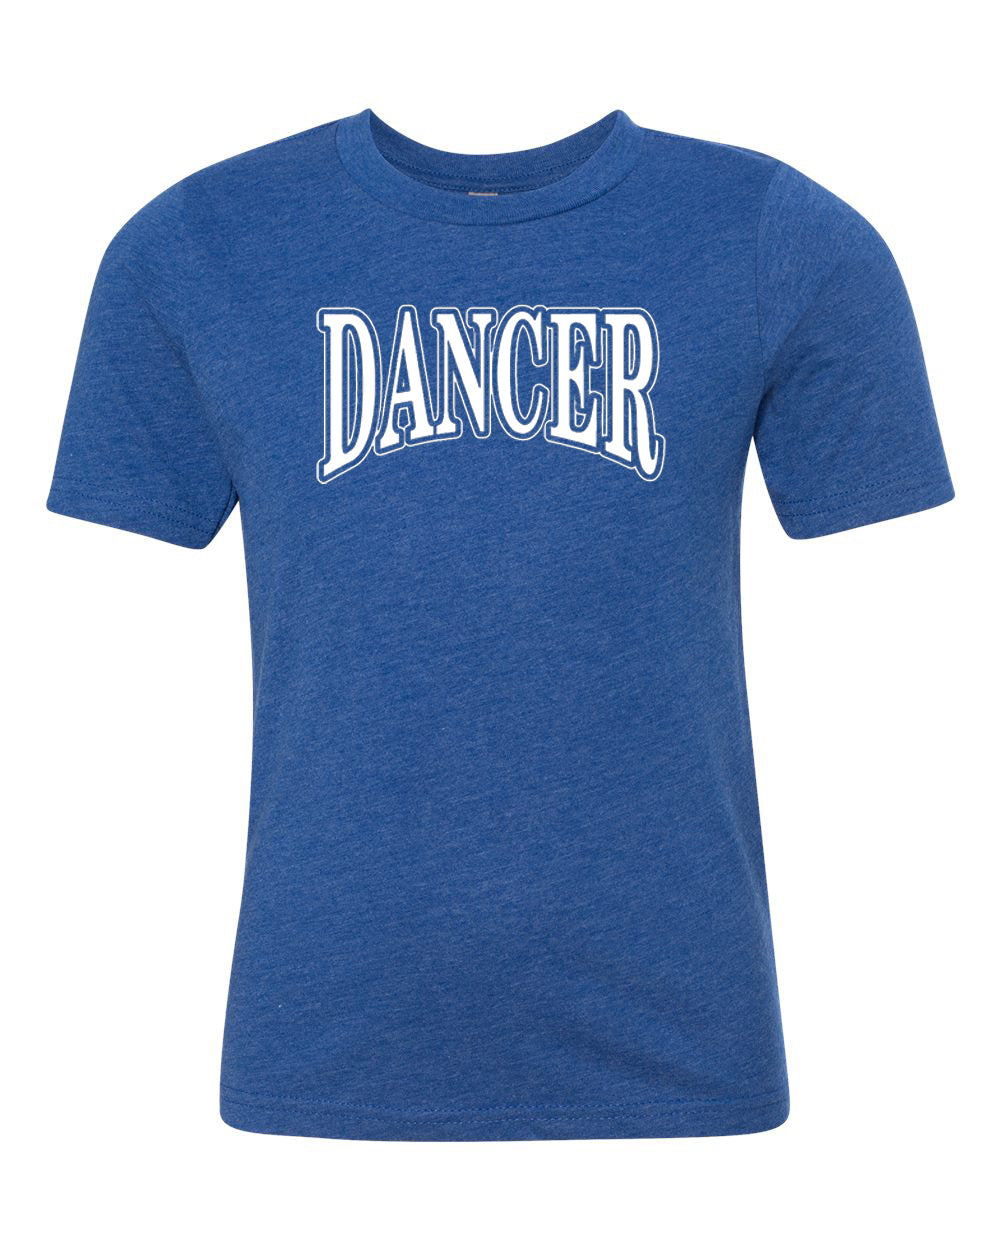 Dancer Youth T-Shirt